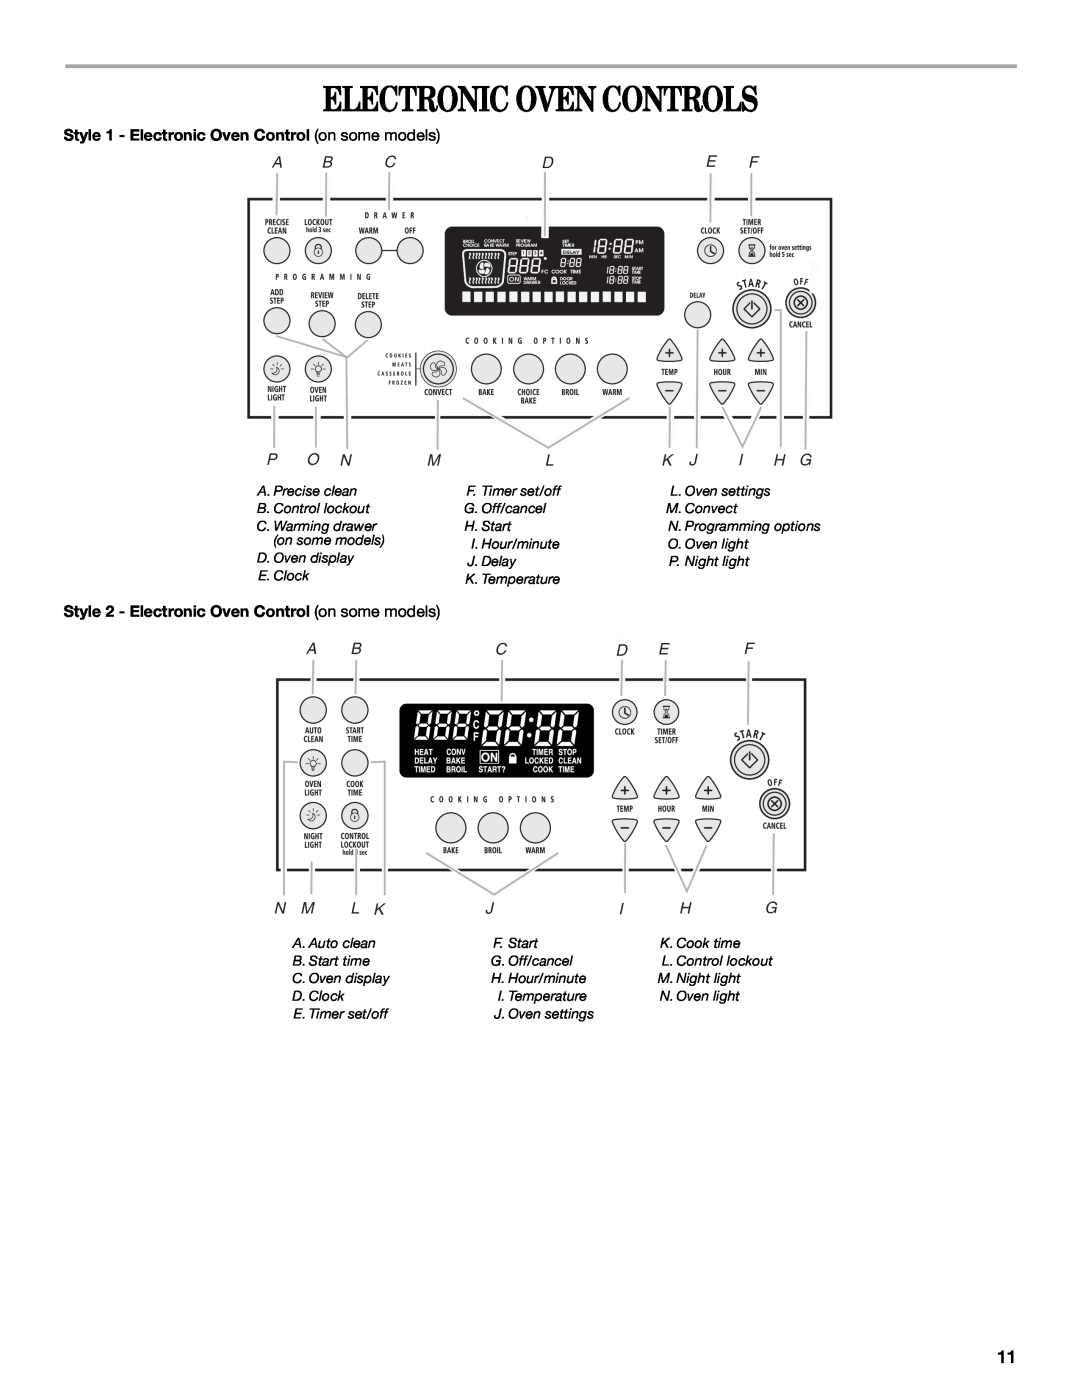 Whirlpool 9763001 manual Electronic Oven Controls, A B Cde F, A Bcd Ef, Style 1 - Electronic Oven Control on some models 